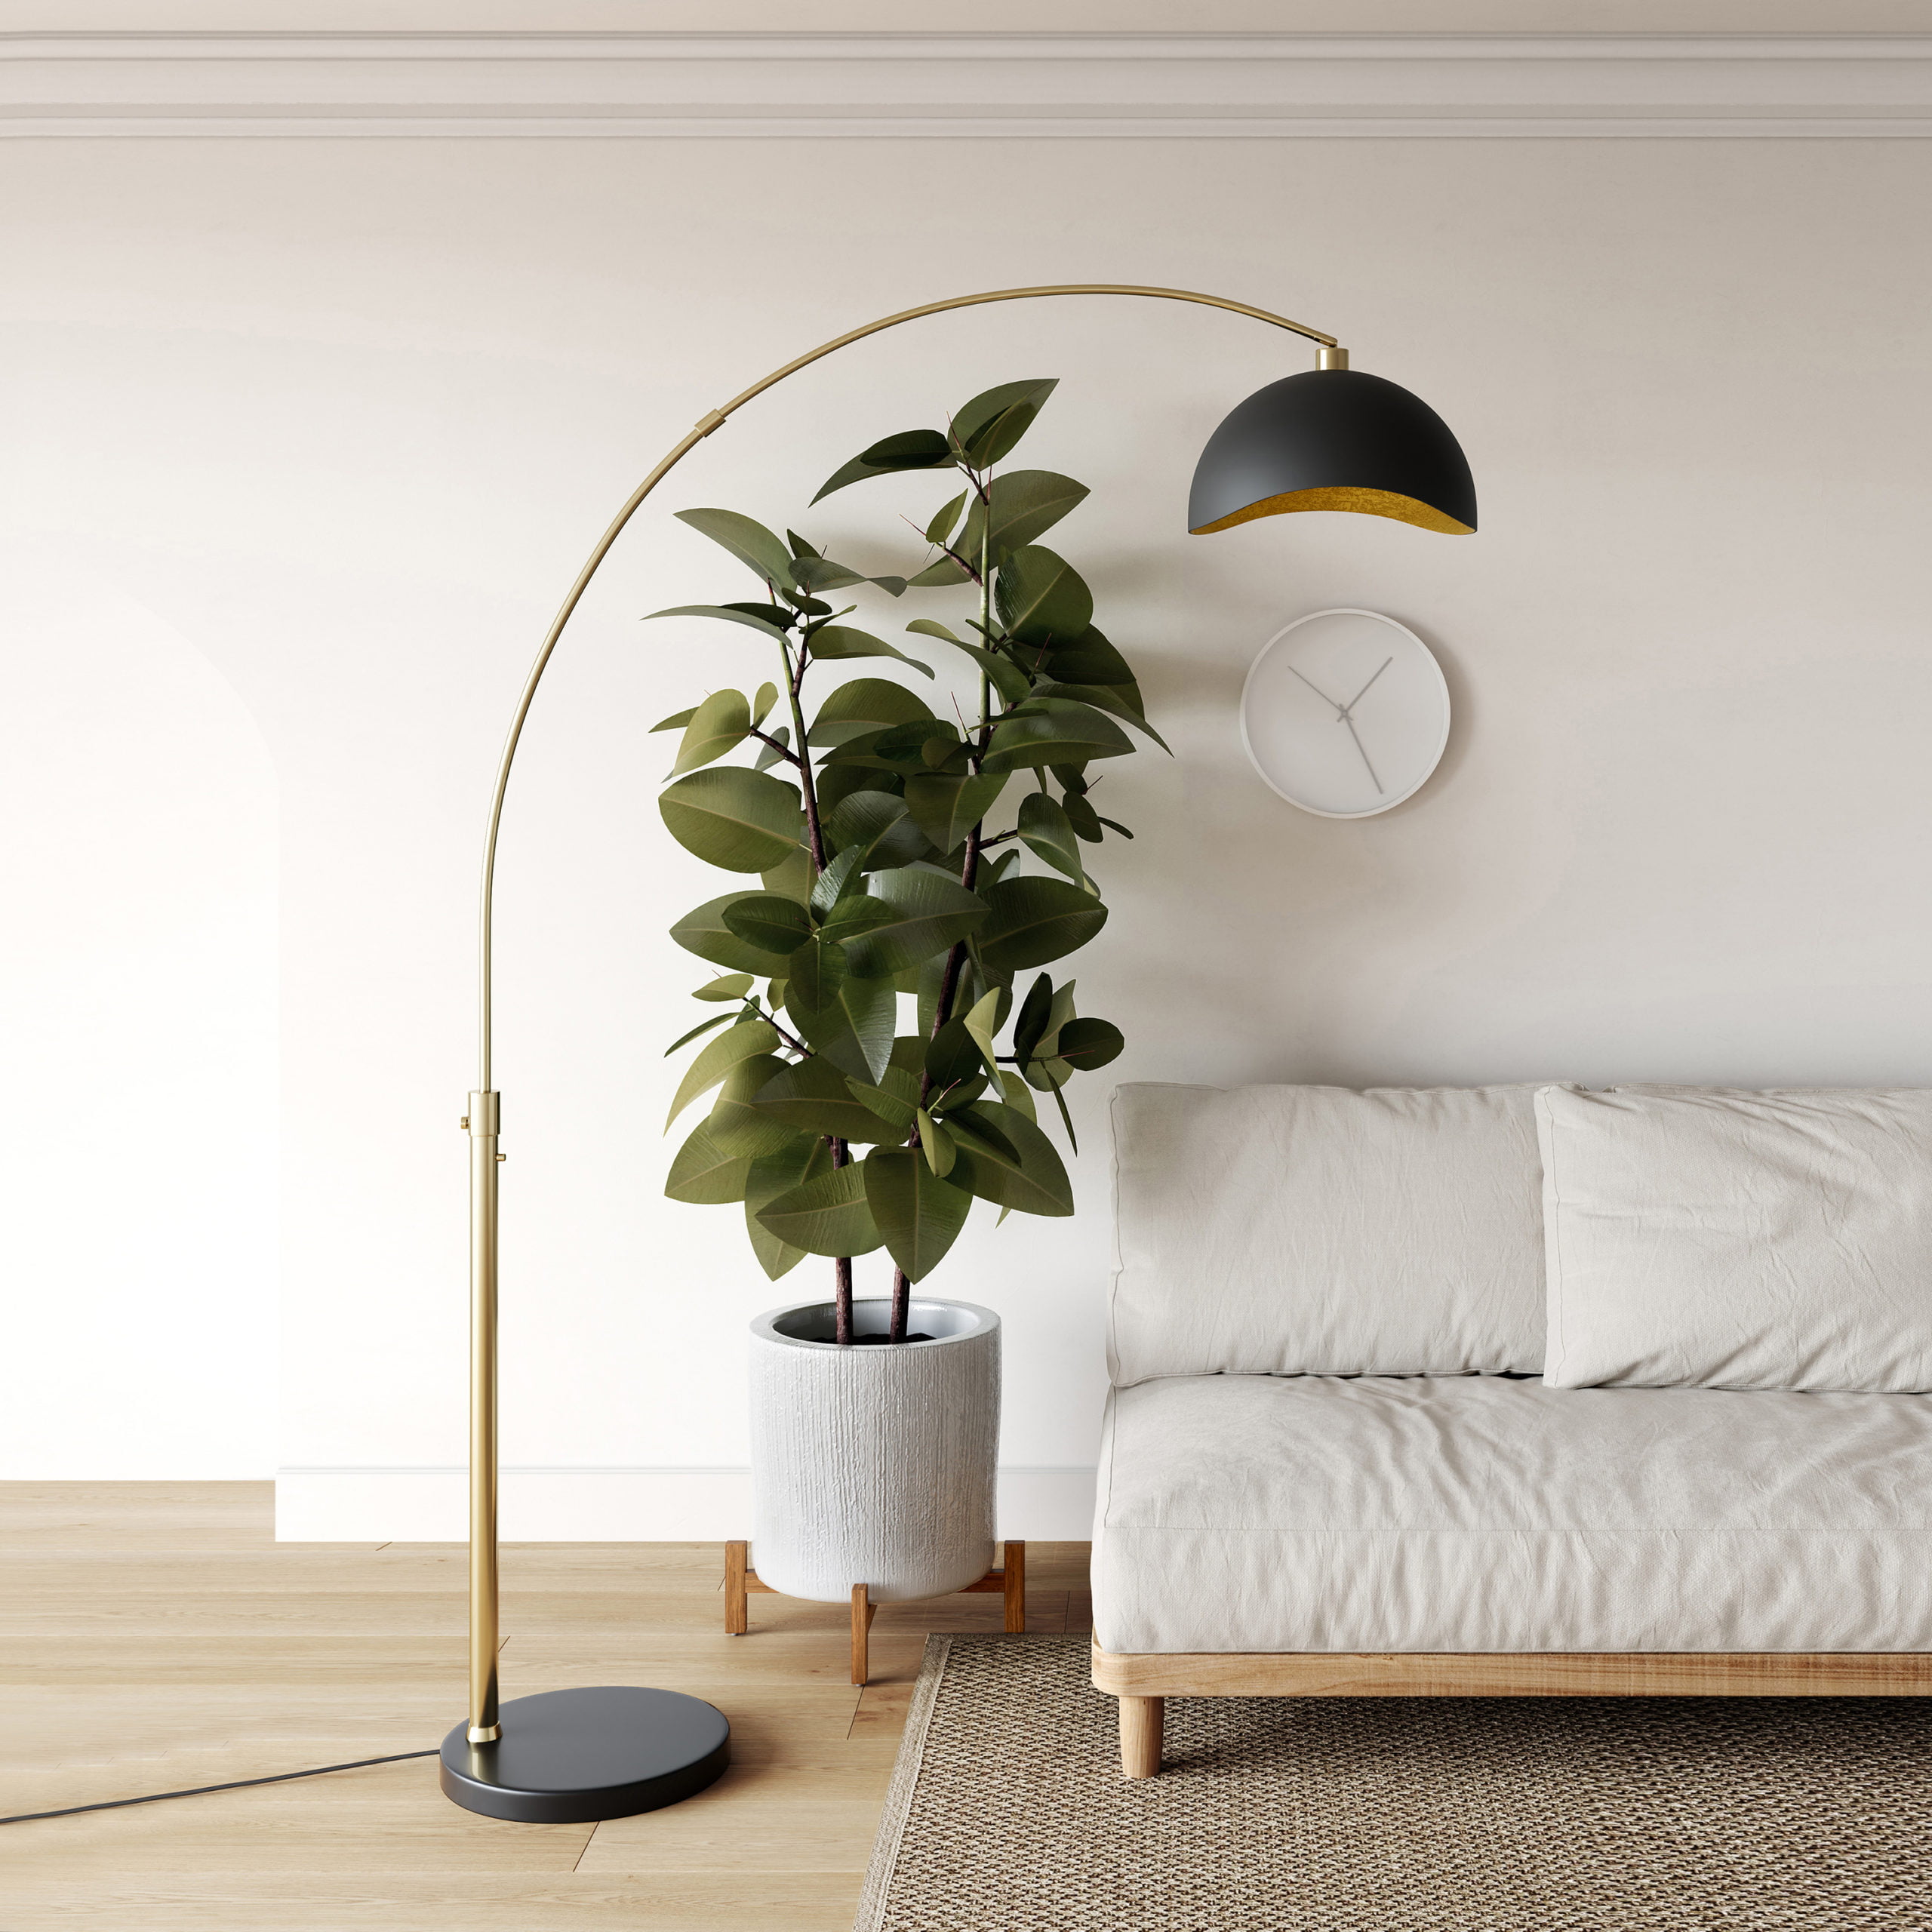 The Art Of Arc Floor Lamp Nova, Over The Sofa Floor Lamps